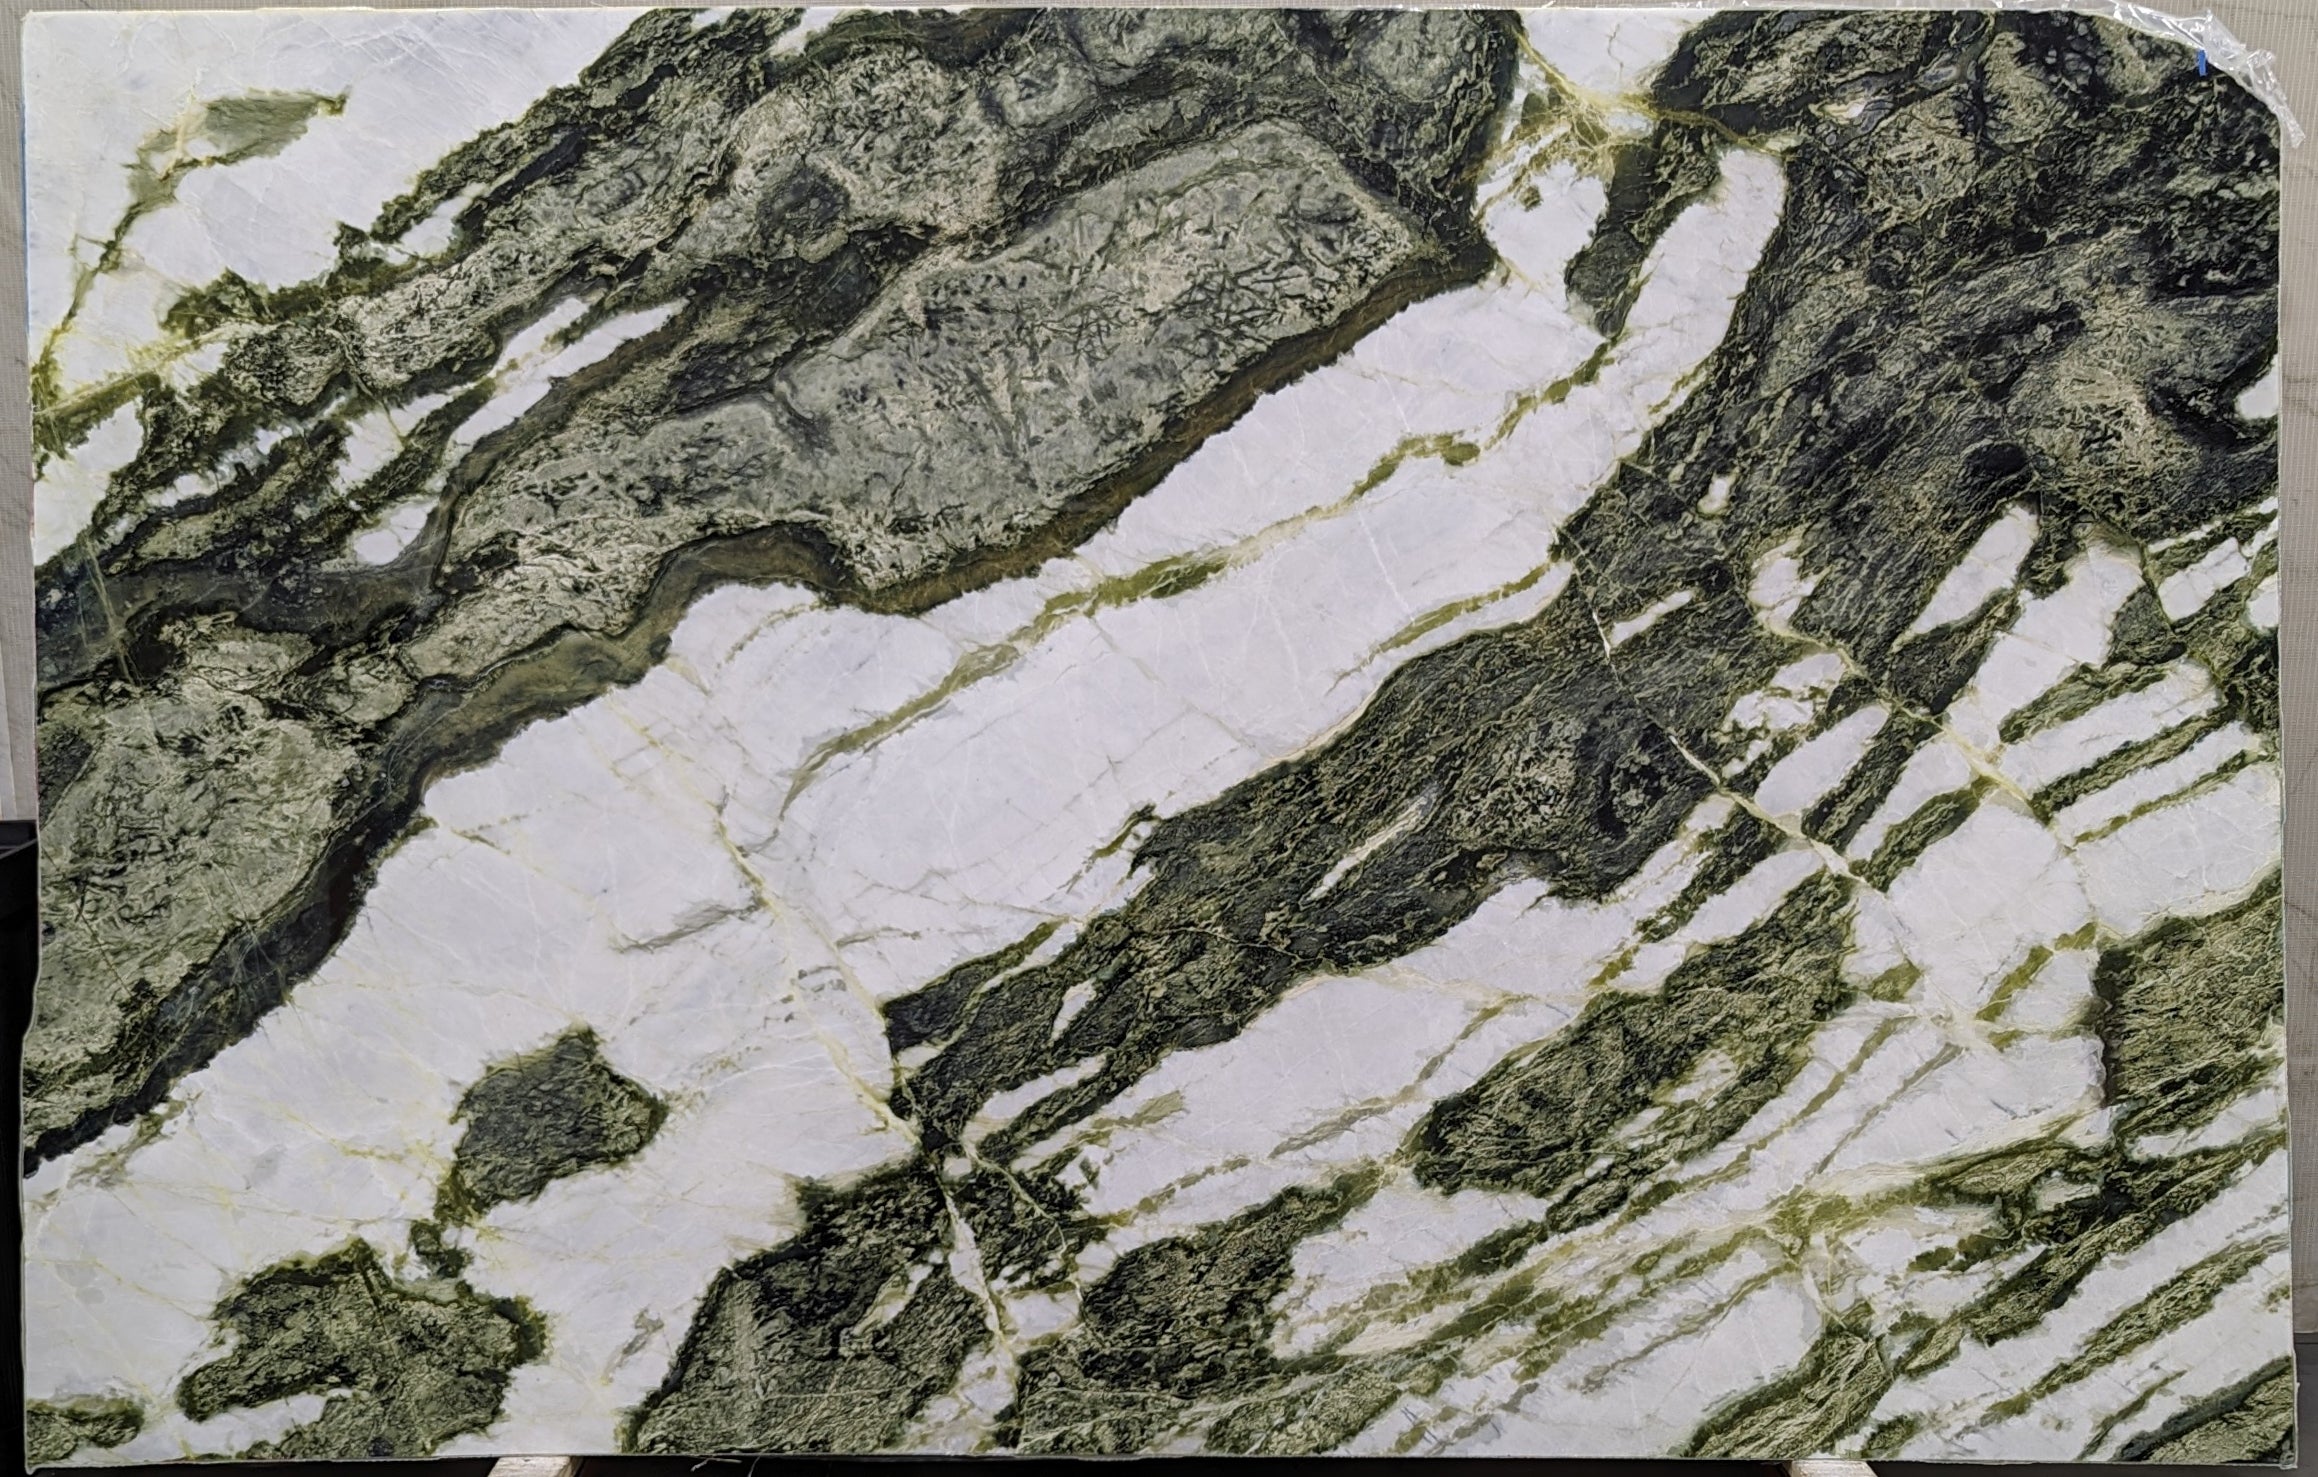  Calacatta Verde Marble Slab 3/4 - 711/B#21 -  65X108 